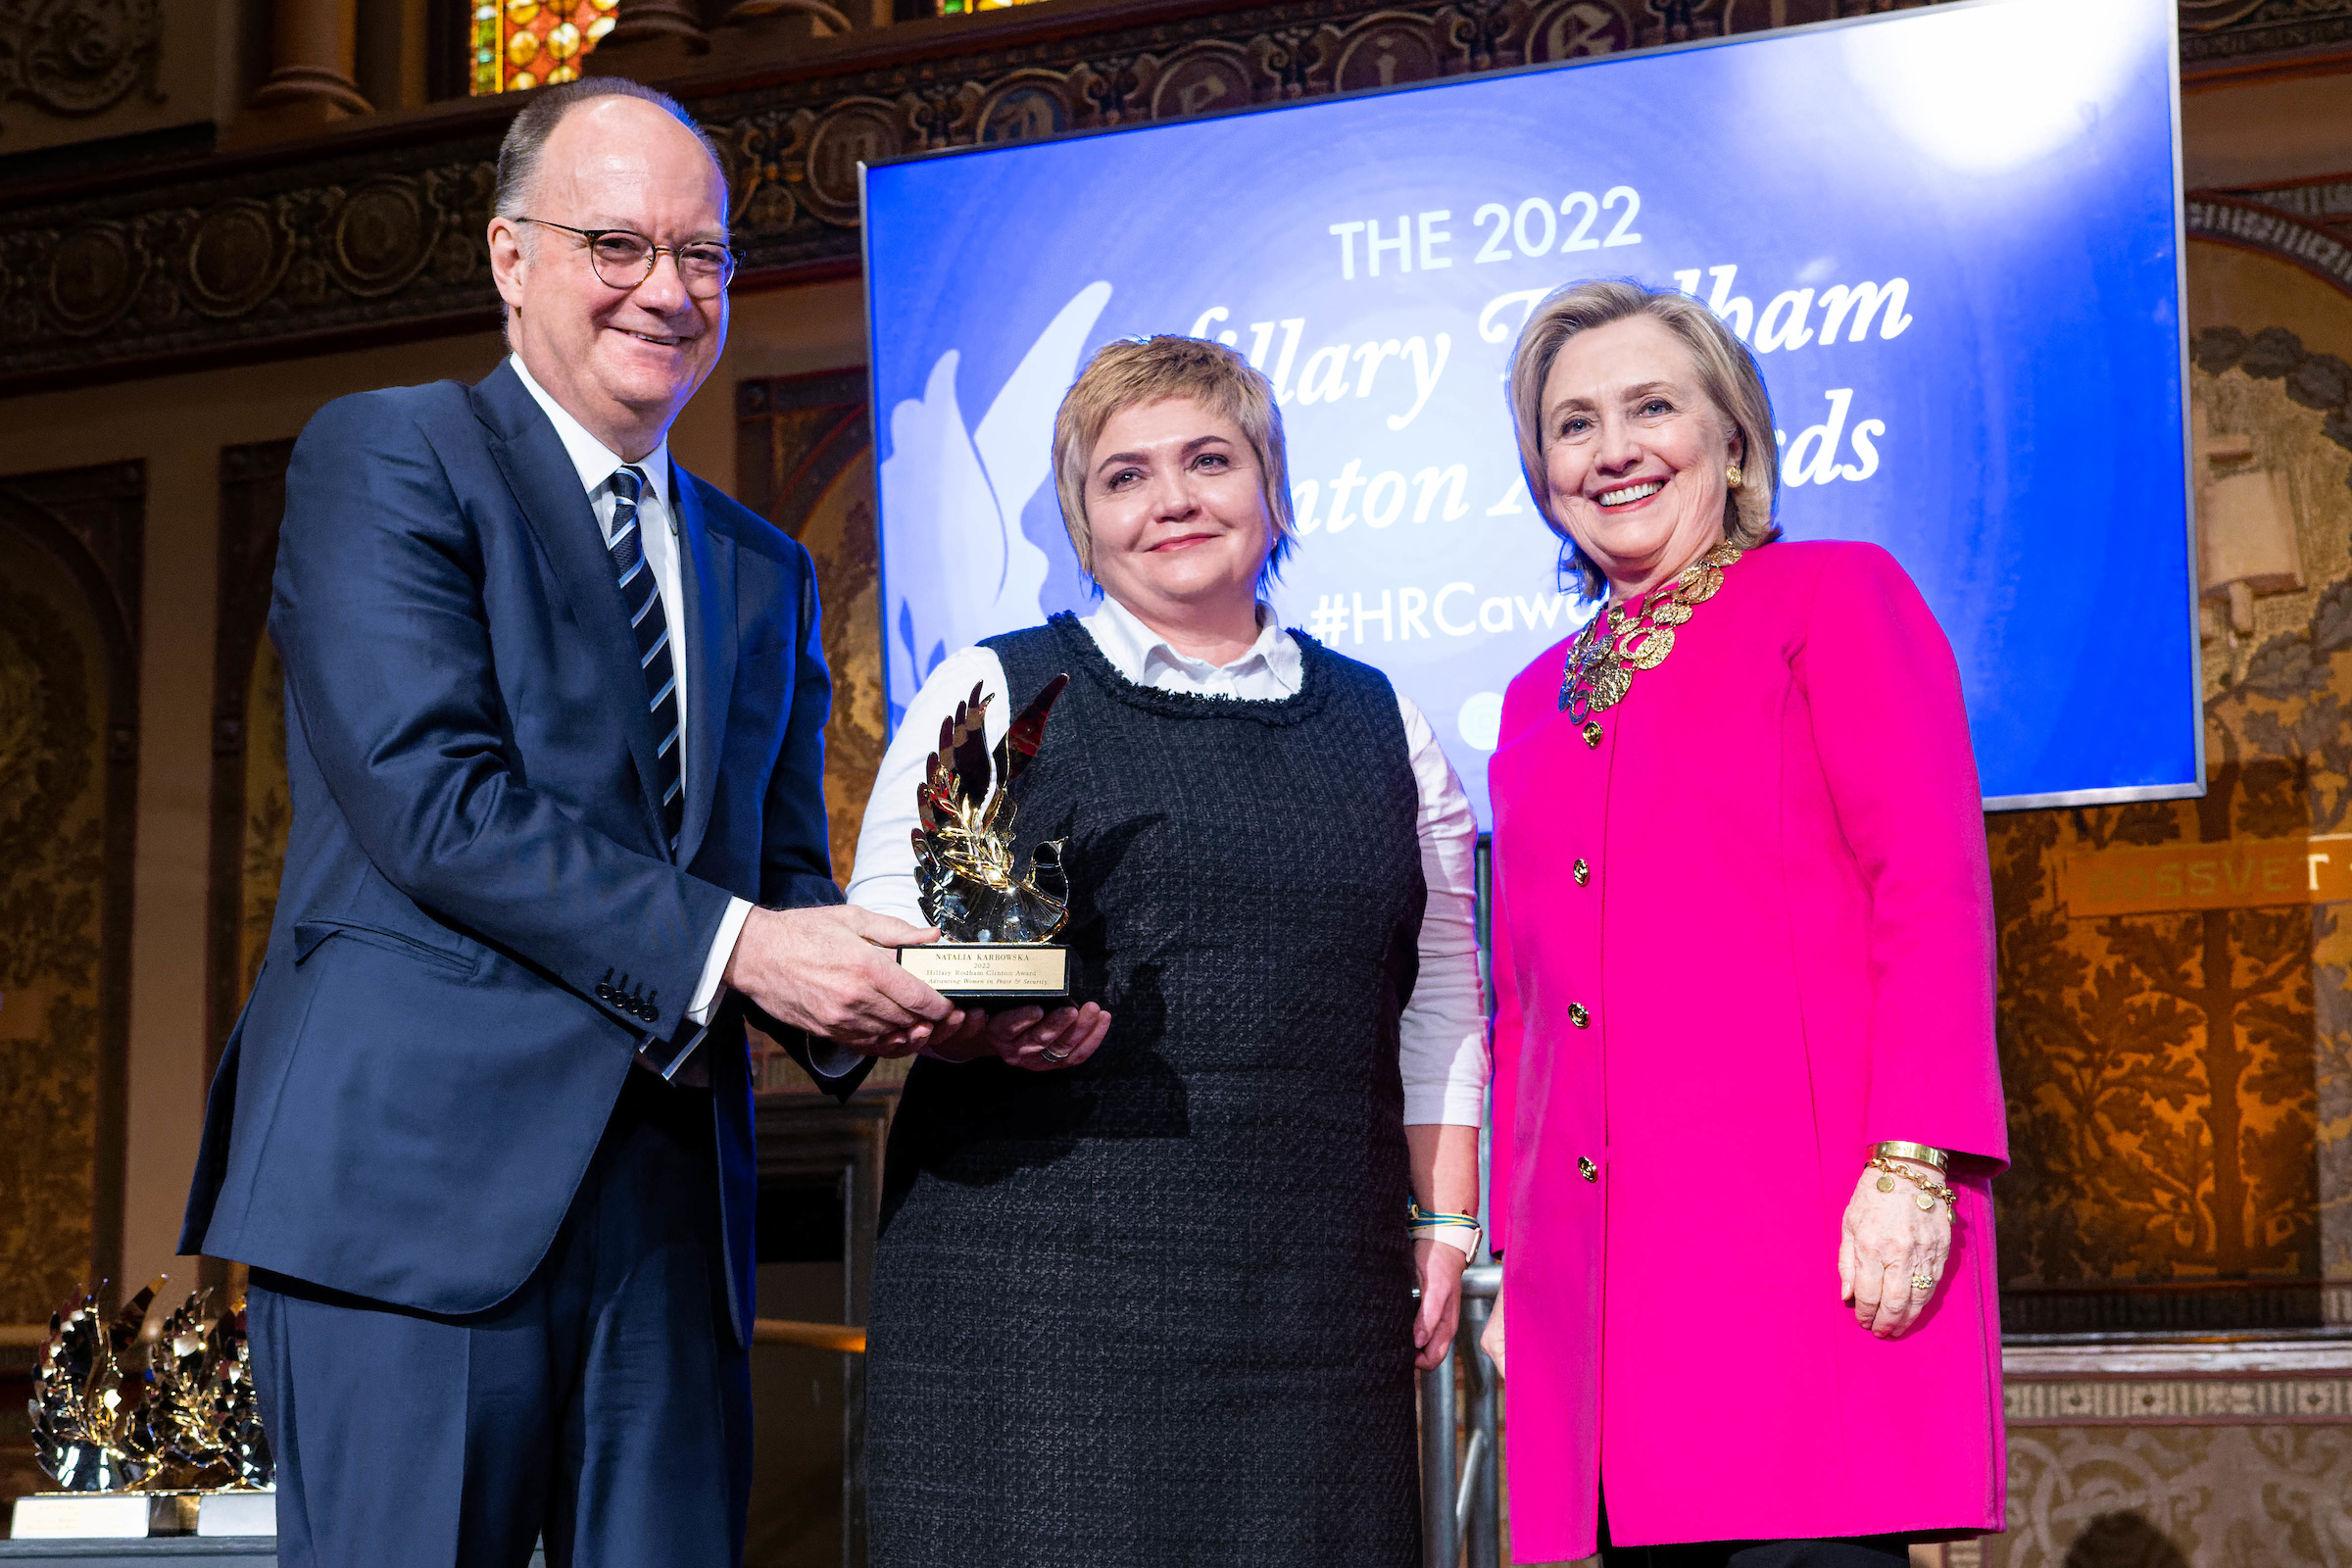 Jack DeGioia, Natalia Karbowska and Hillary Clinton hold an award onstage. 